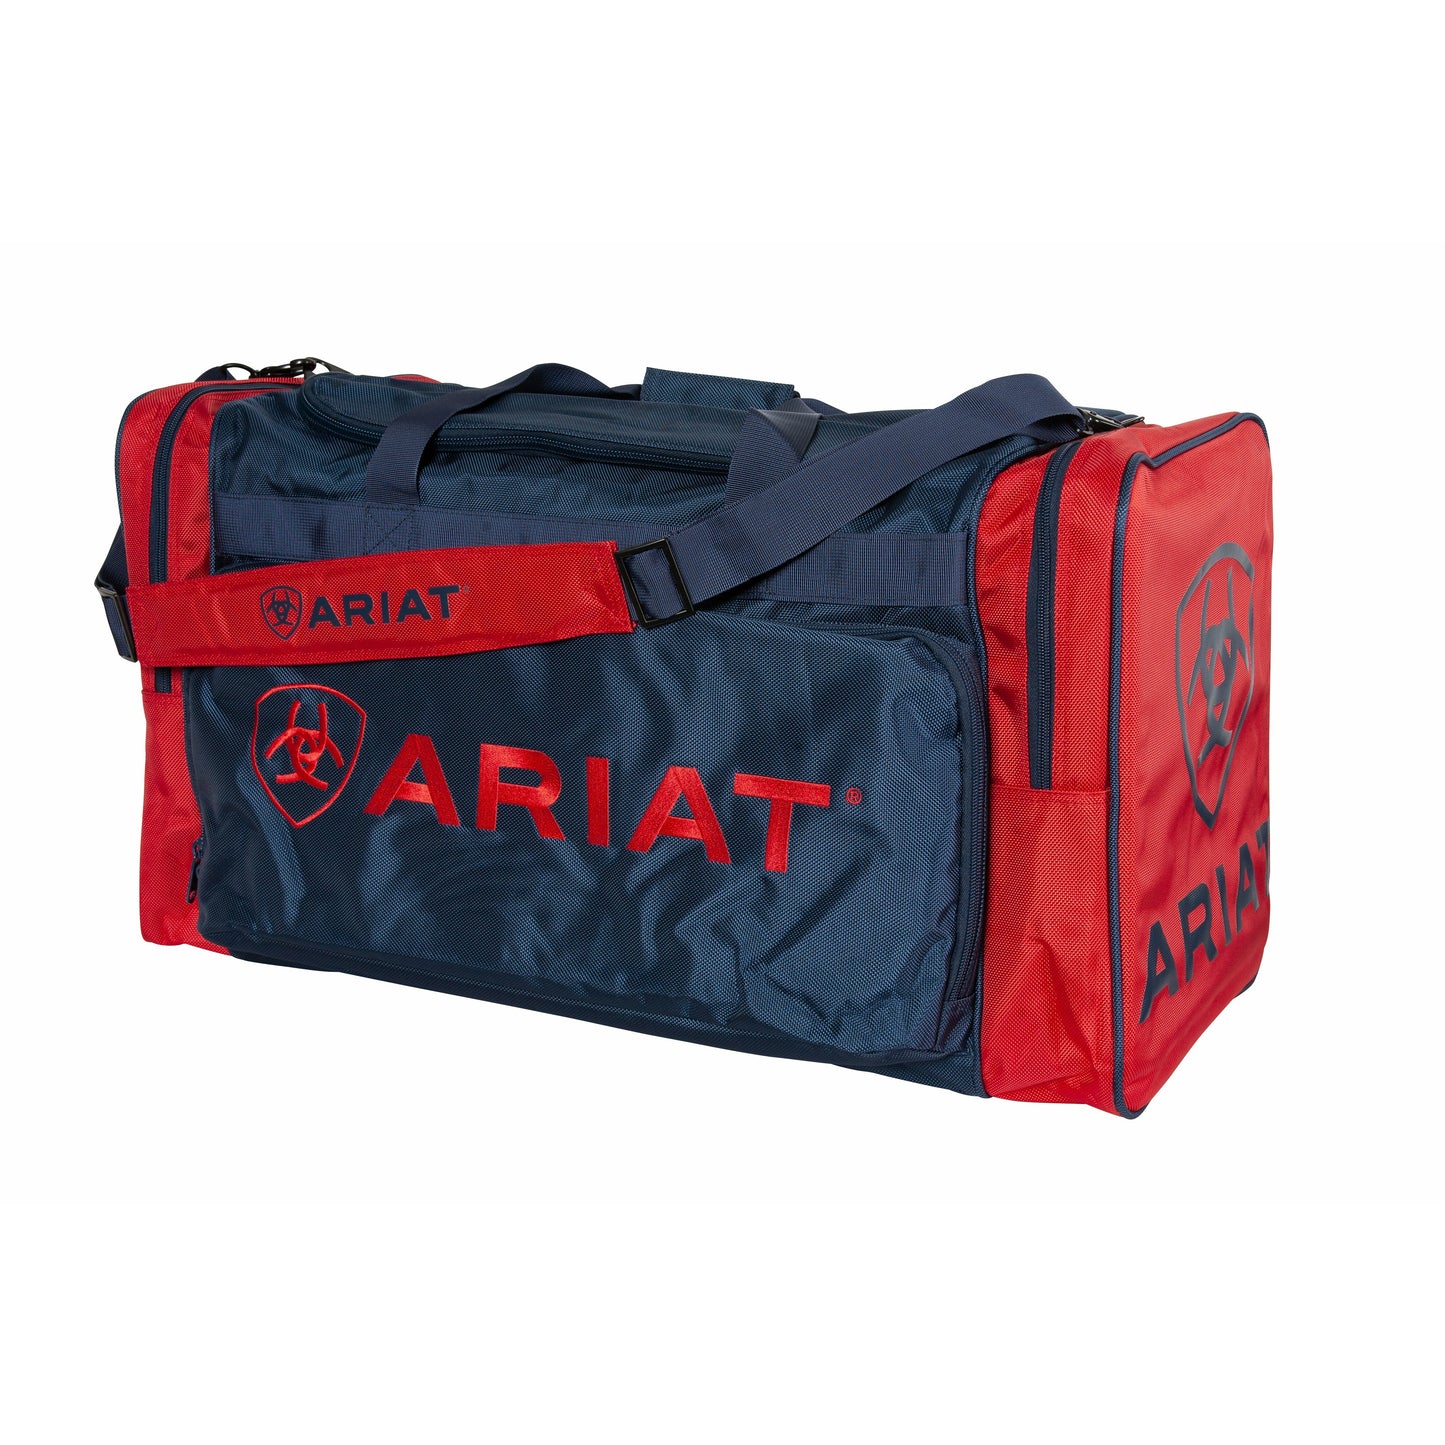 Ariat Gear Bag Red/Navy